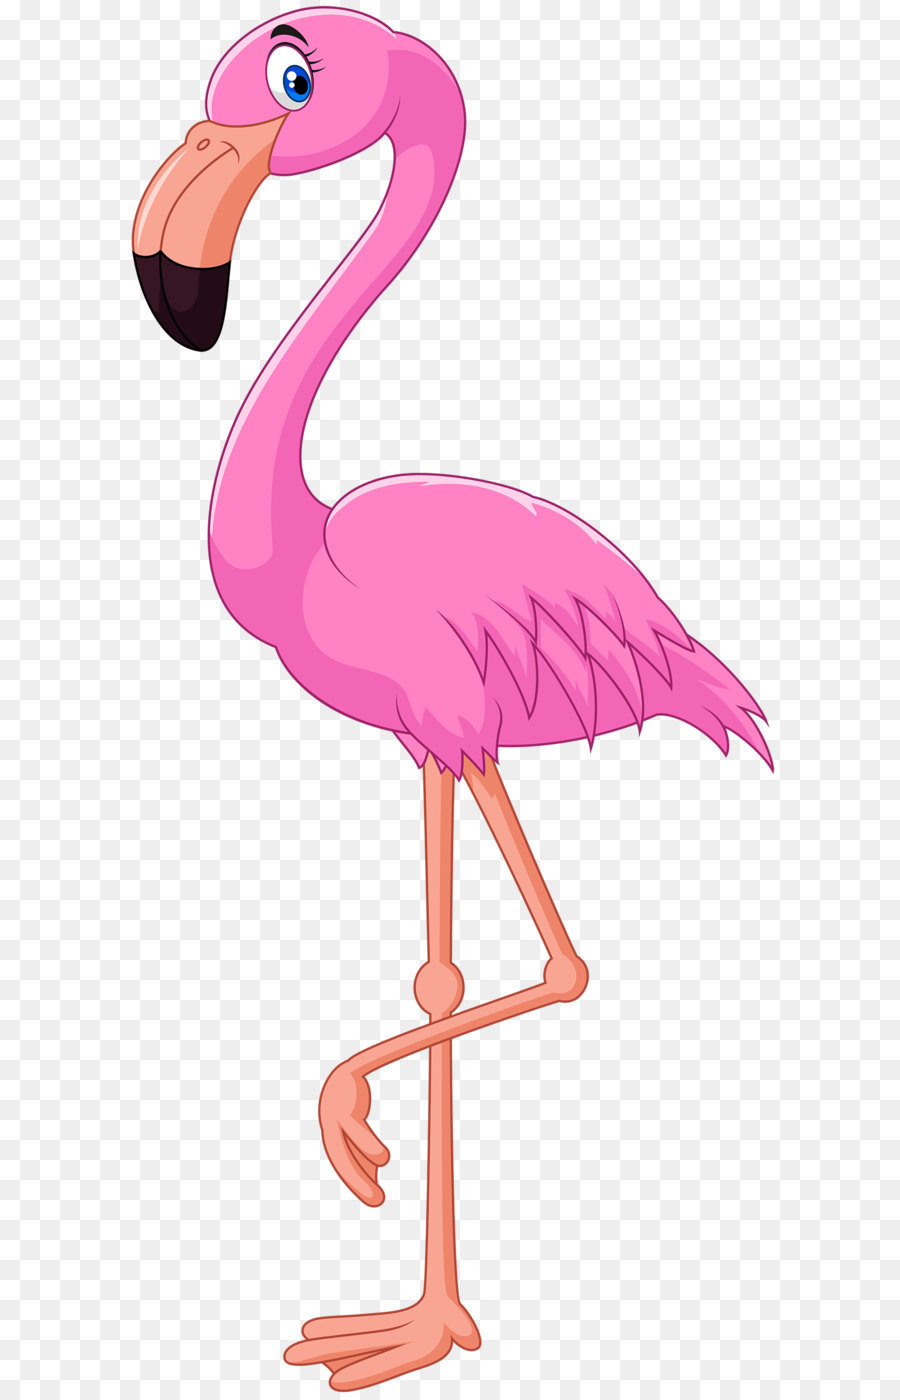 Cartoon Flamingo Bird Illustration - Flamingo PNG png download - 1165*2500 - Free Transparent Flamingo png Download.